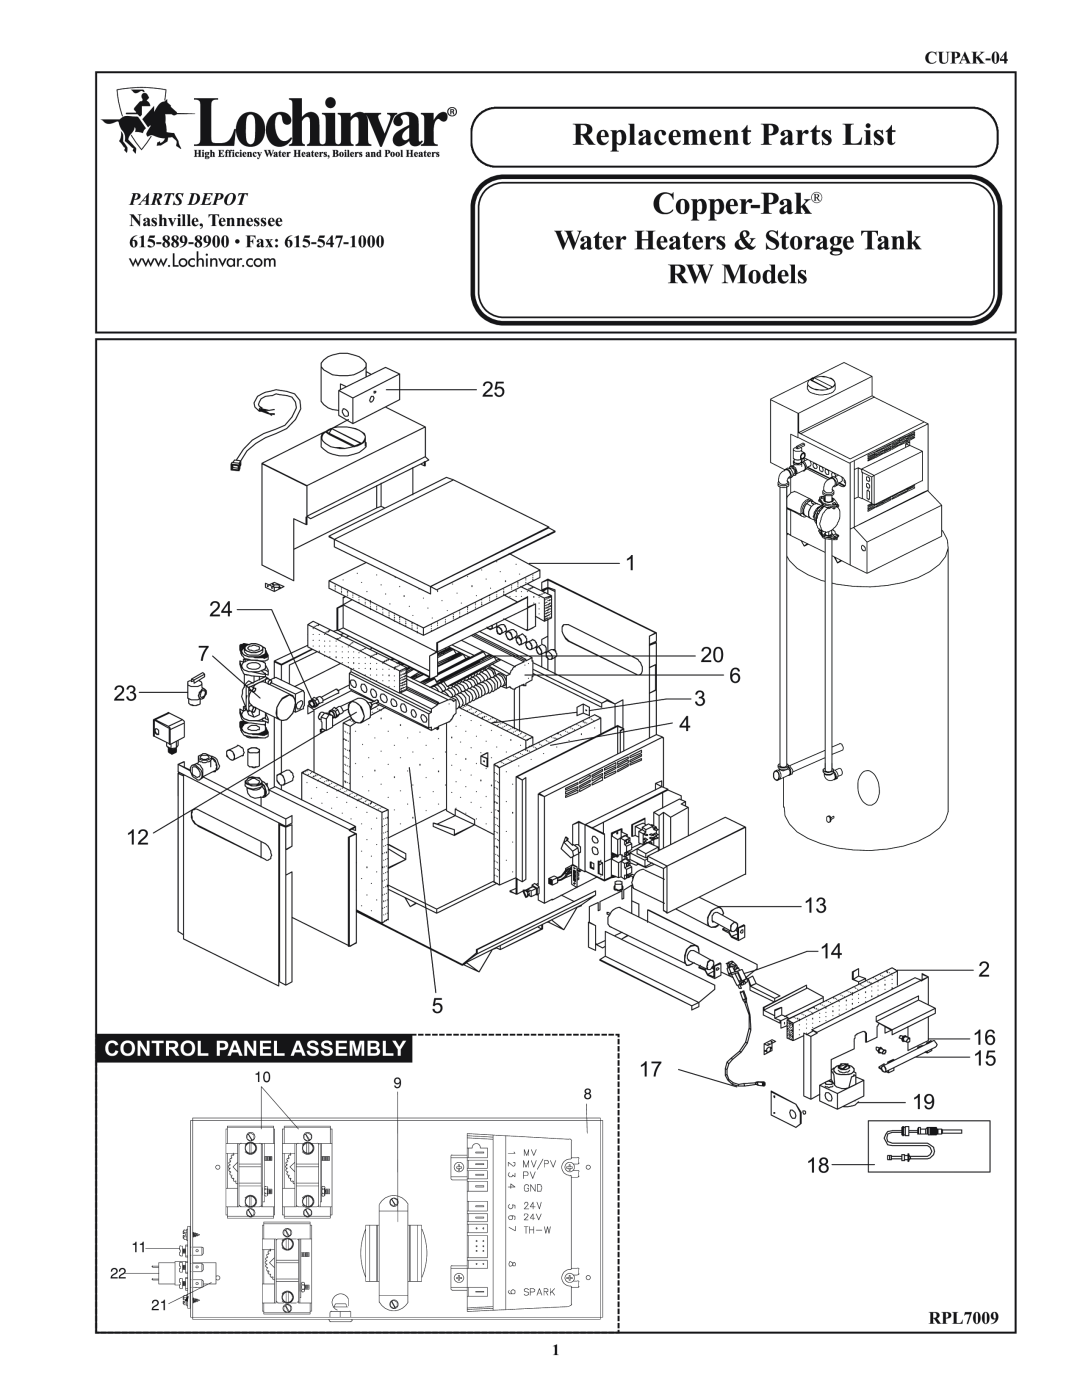 Lochinvar CUPAK-04 manual Replacement Parts List, Copper-Pak, RW Models, Water Heaters & Storage Tank 